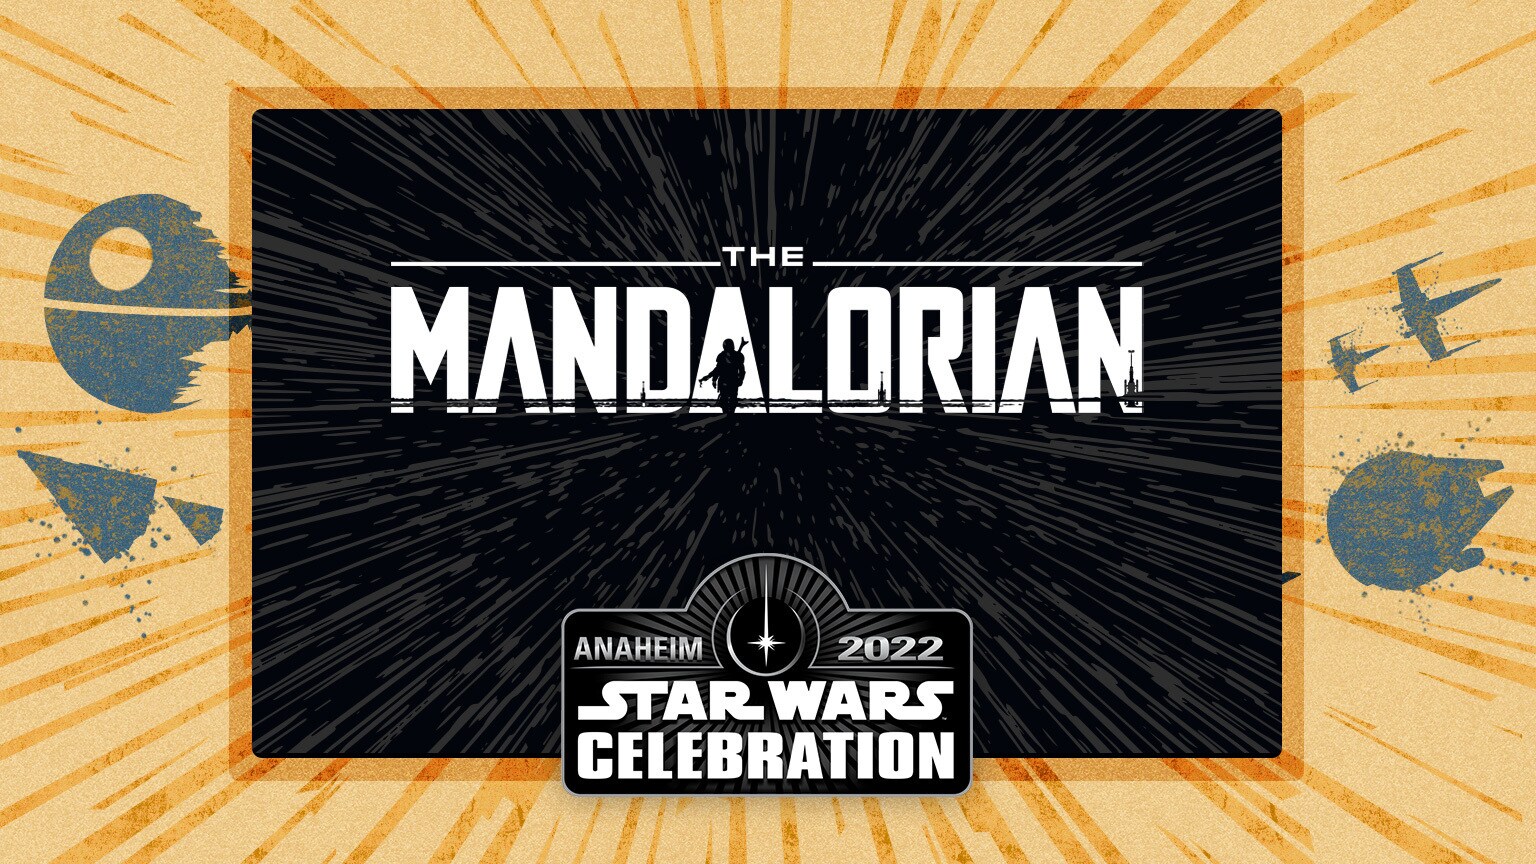 Jon Favreau and Dave Filoni to Talk The Mandalorian at Star Wars Celebration Anaheim 2022